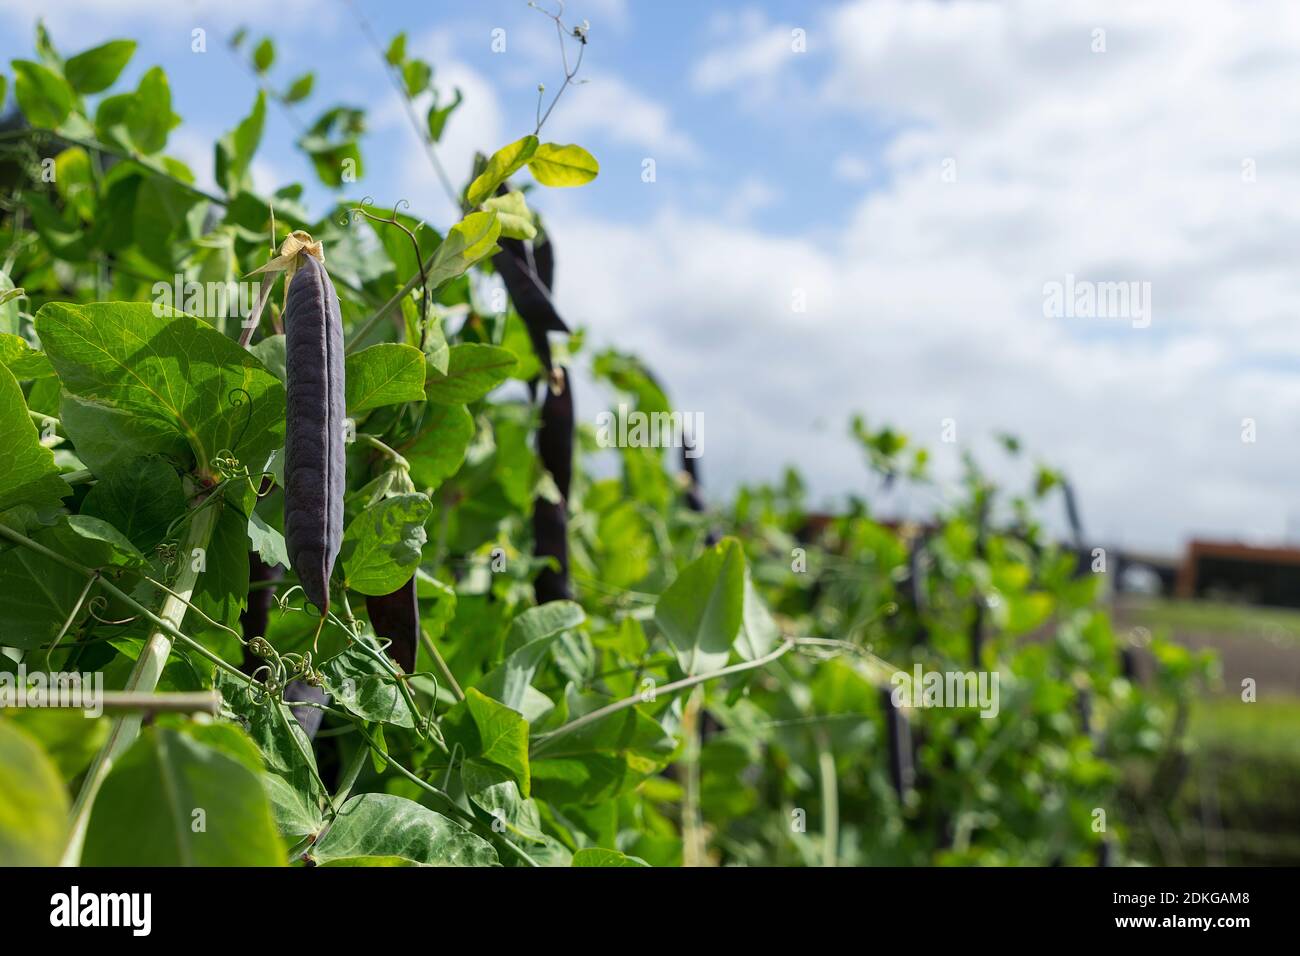 Marrowfat pea plant. Green vegetable marrow  growing on bush in a vegetable garden Stock Photo